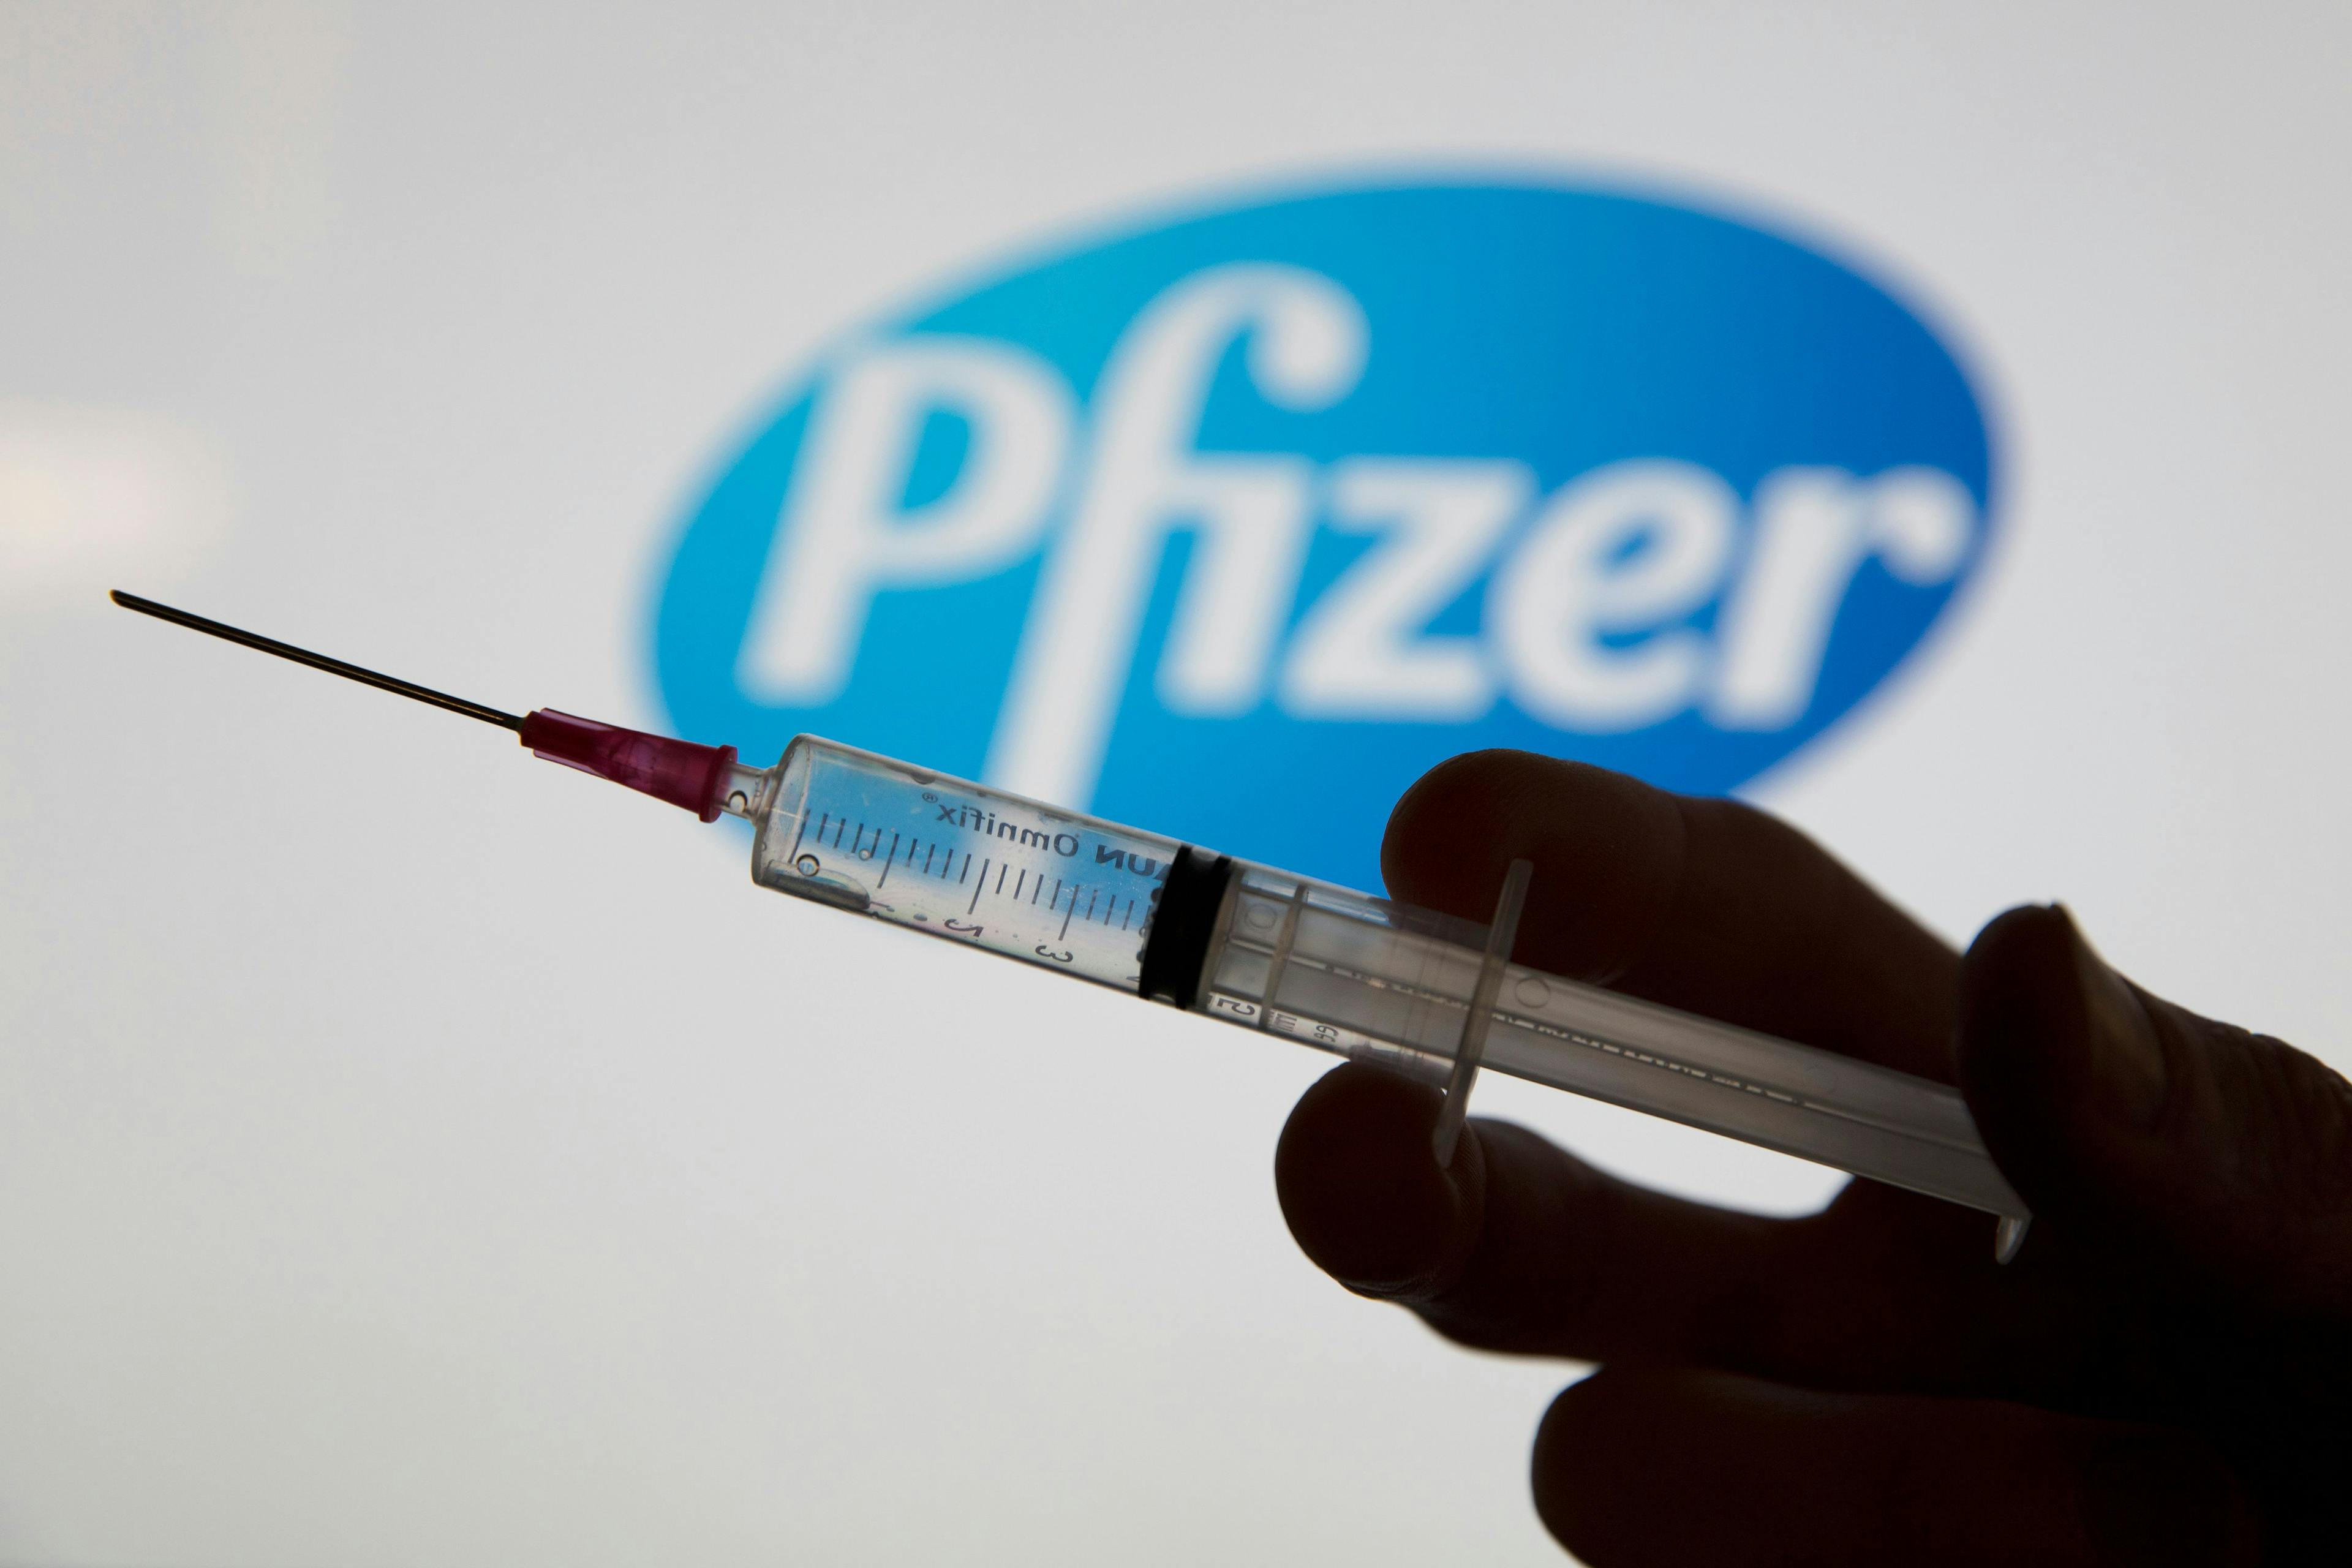 Containing 20 serotypes, Pfizer's Prevnar 20 grants the broadest serotype coverage of any pediatric pneumococcal conjugate vaccine.